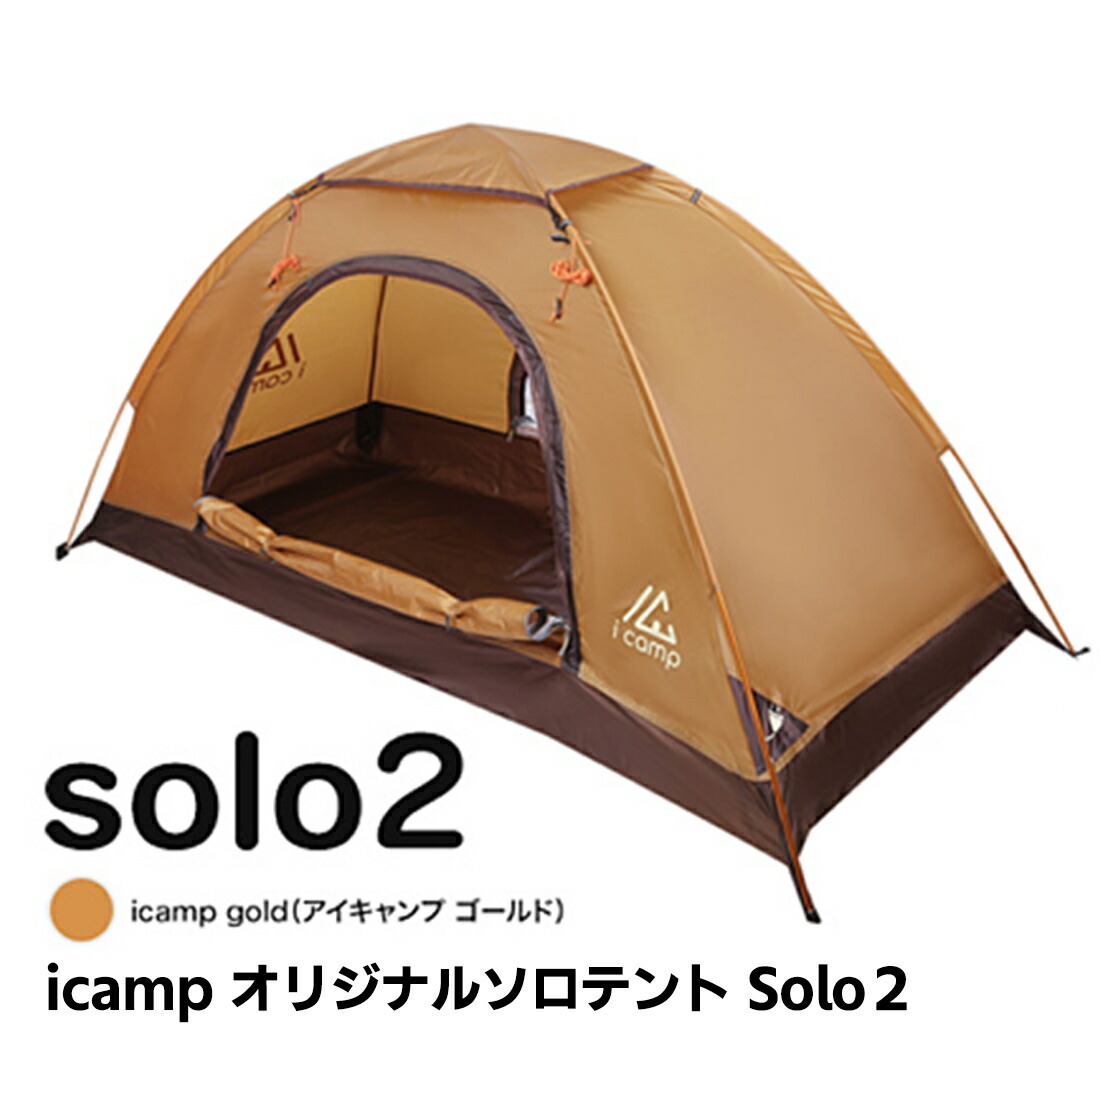 icamp(アイキャンプ) ソロツー ソロテント solo2 広々使える一人用